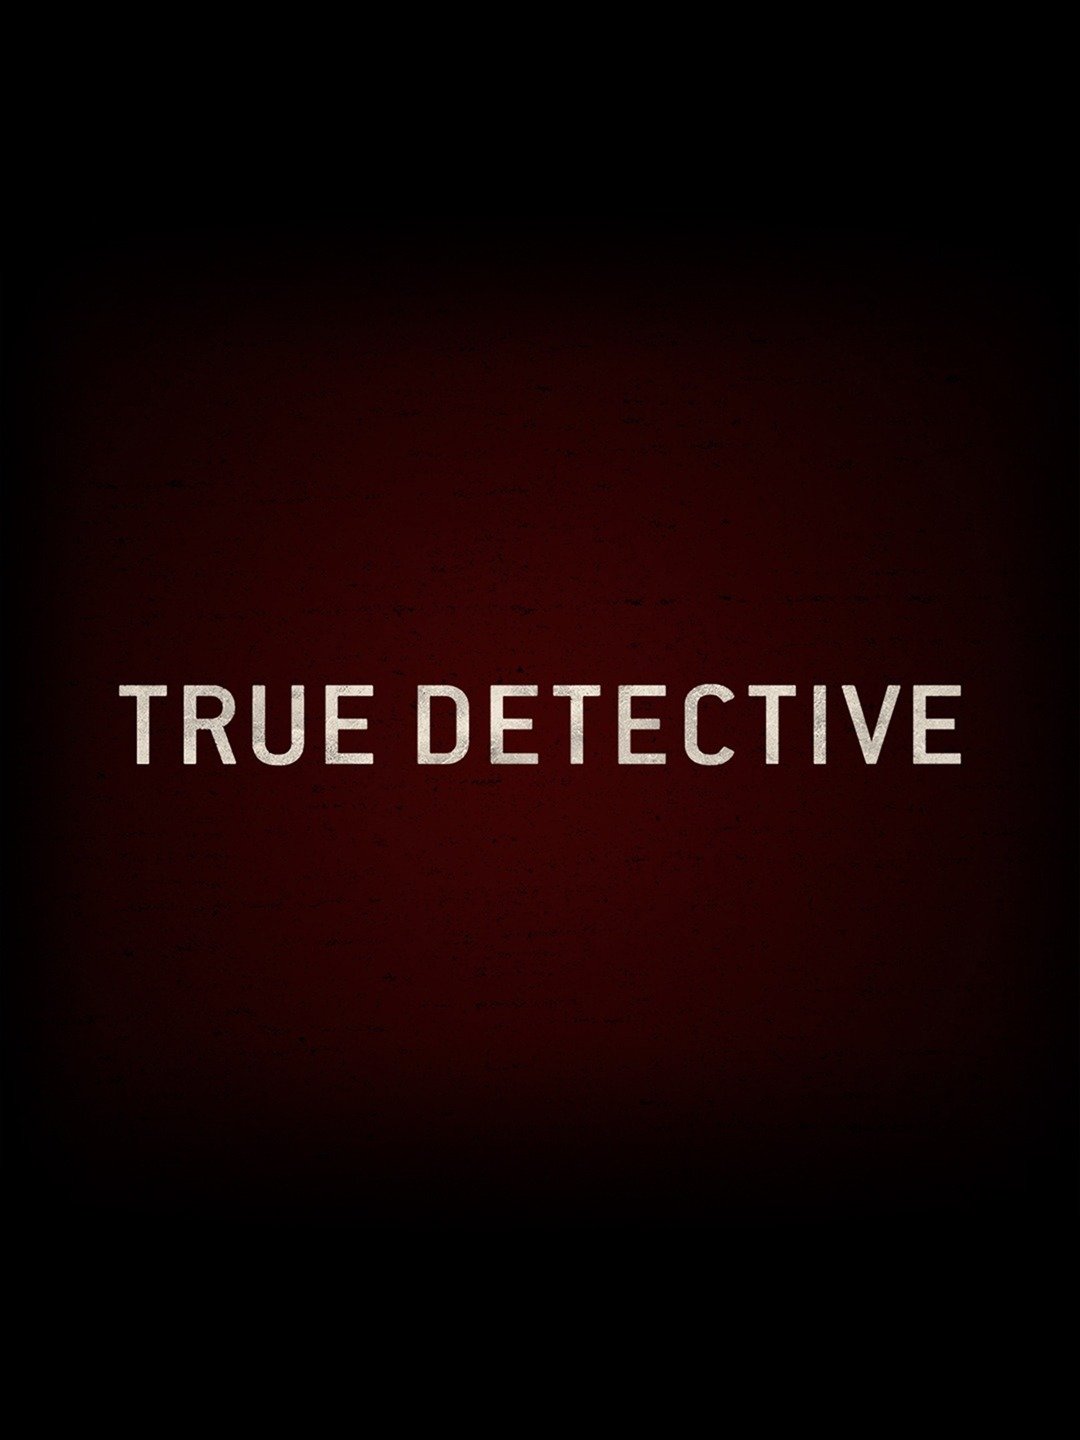 true detective season 1 episode 1 putlocker